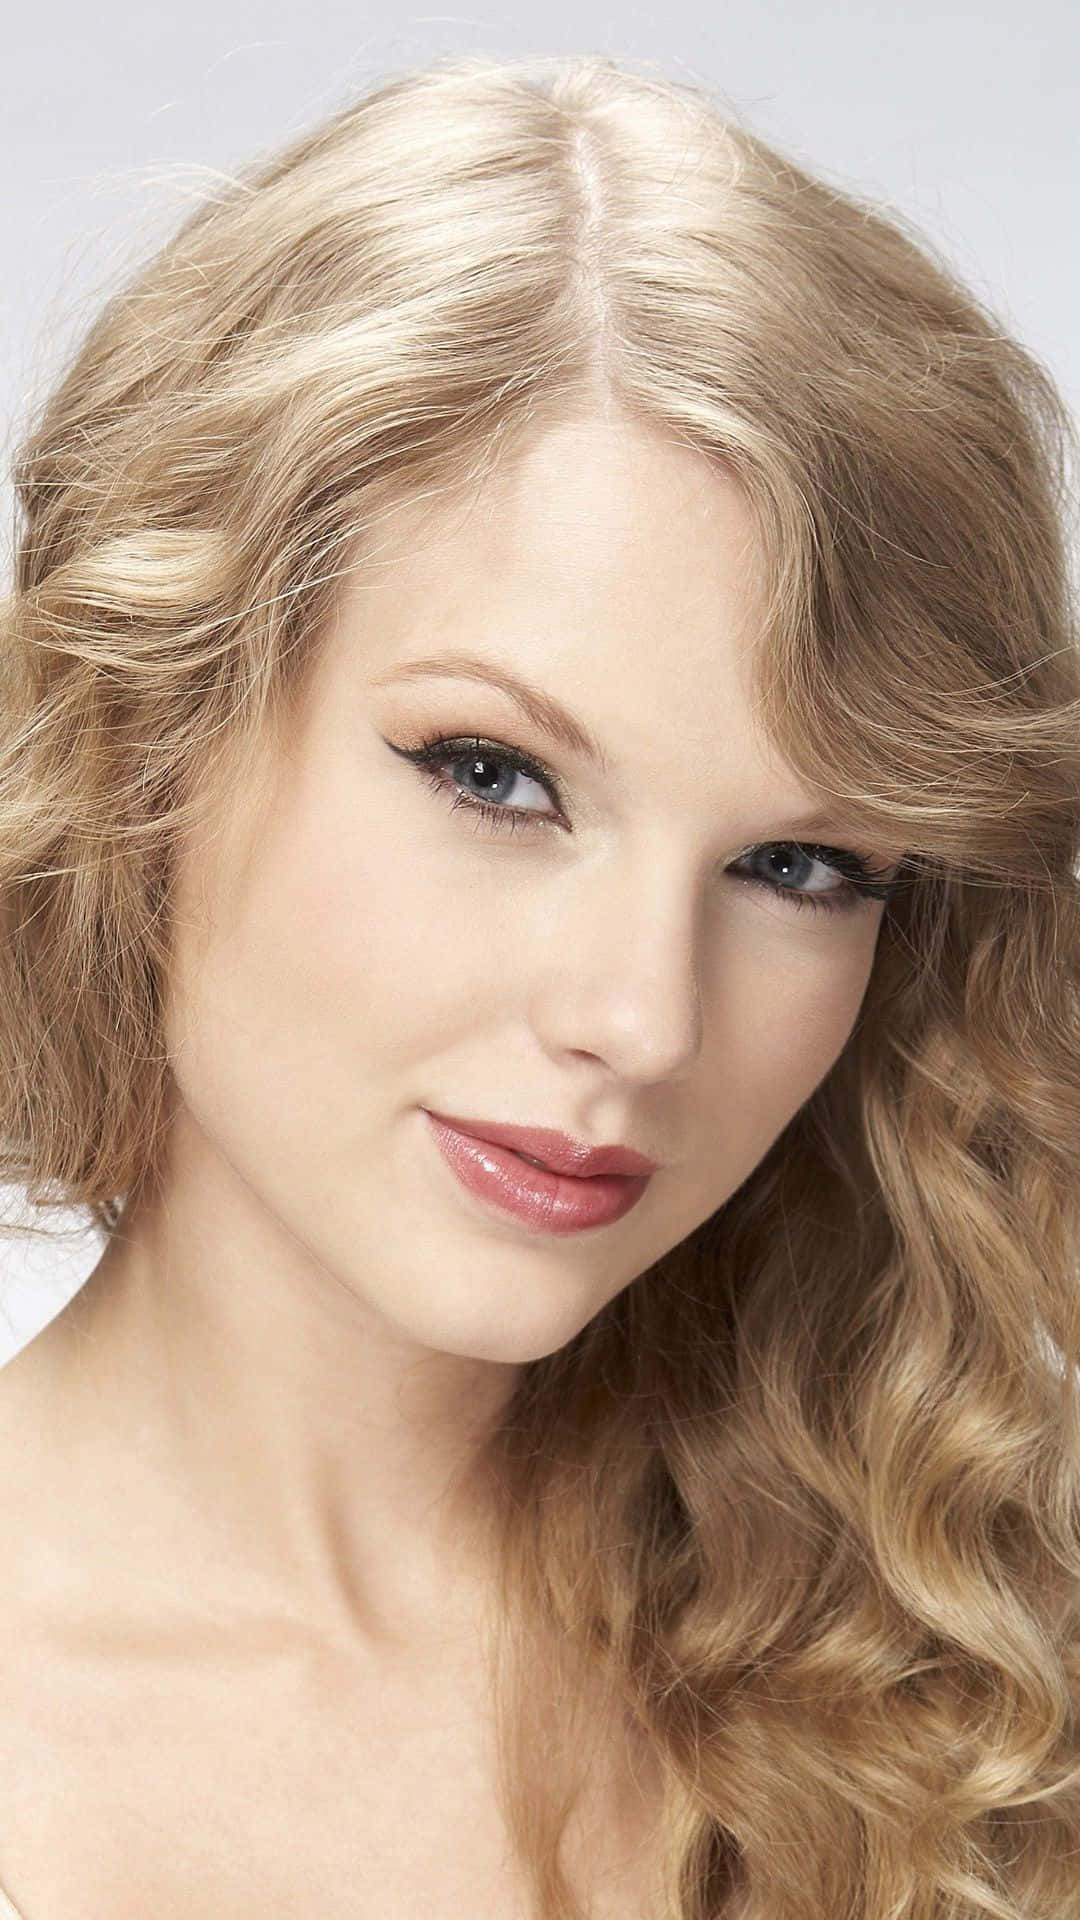 Wallpaperkrulligt Blond Taylor Swift Iphone Bakgrundsbild. Wallpaper